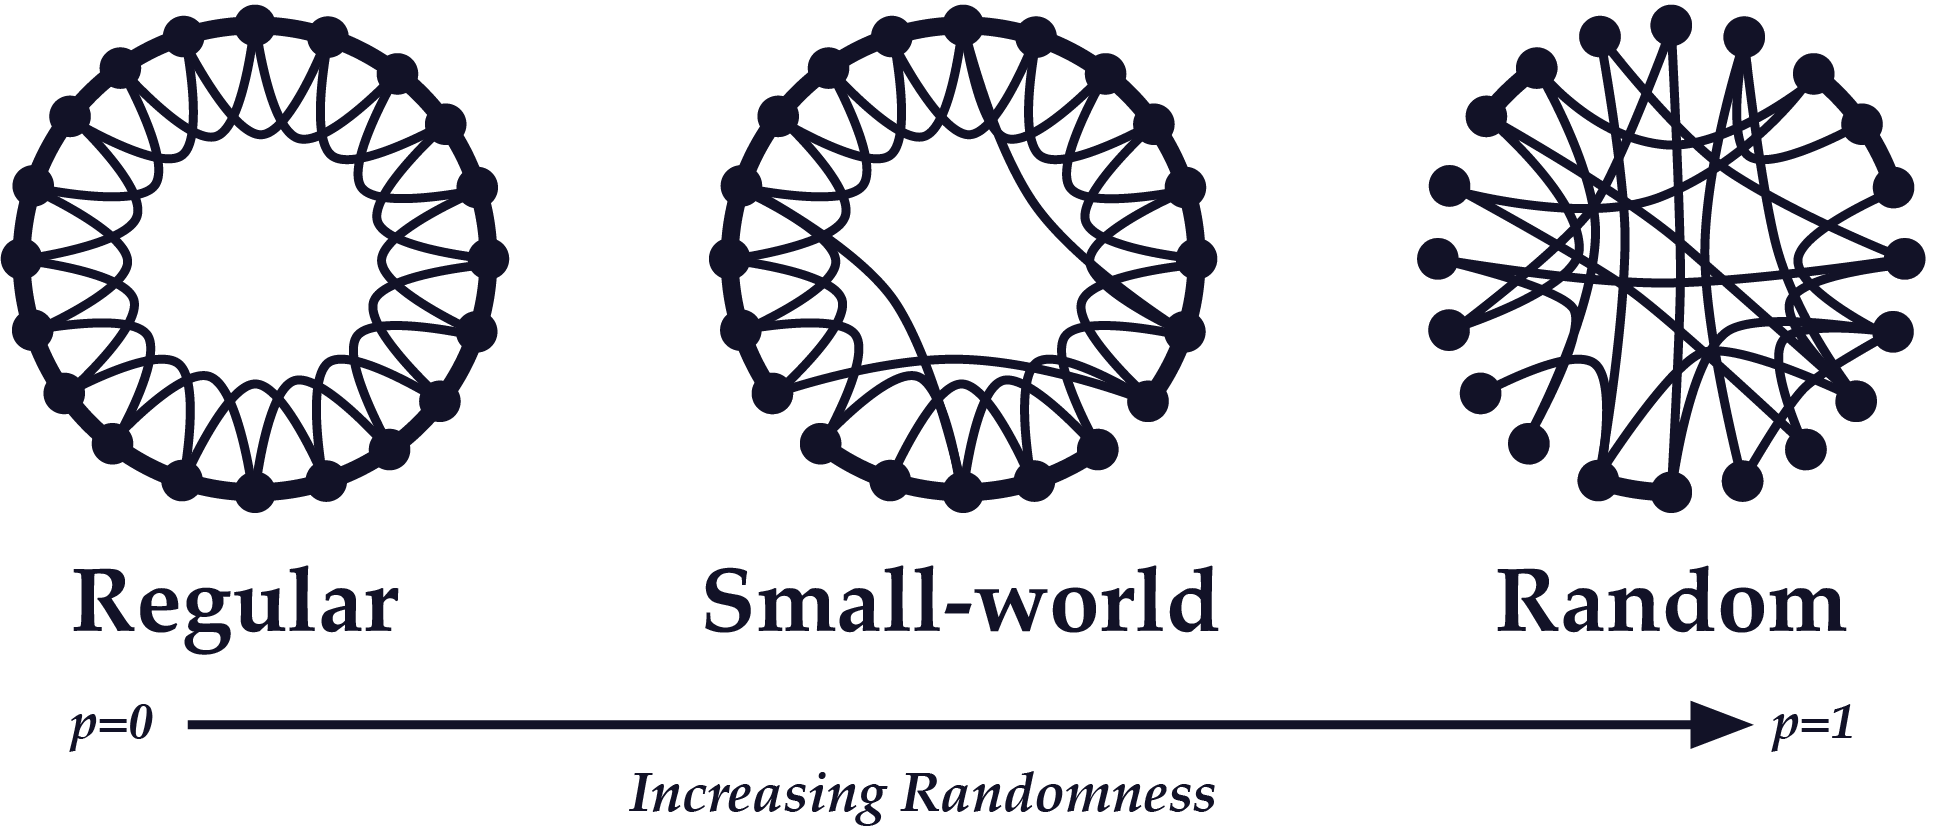 Small-world network diagram